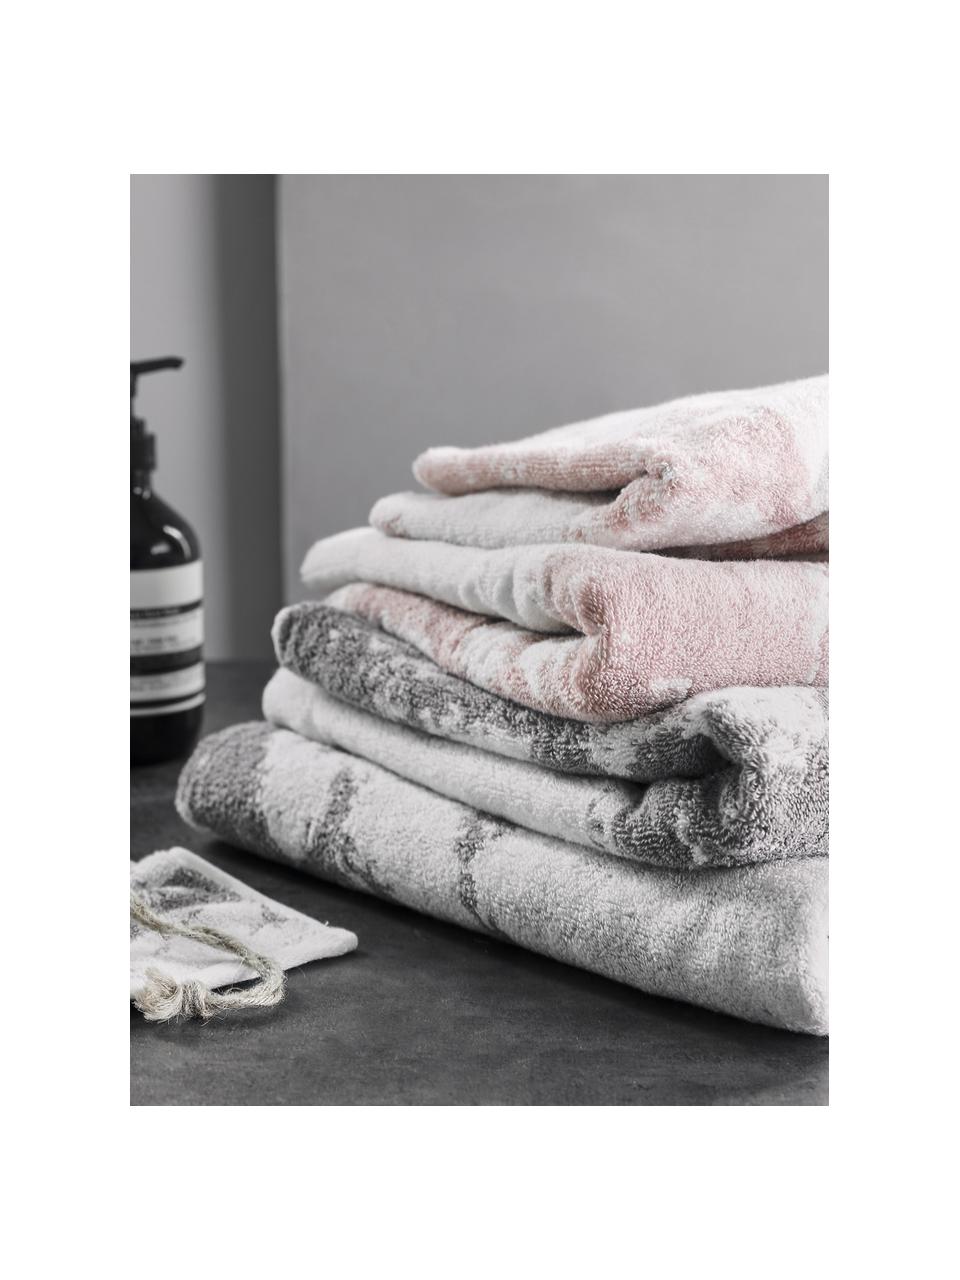 Set 3 asciugamani con stampa marmo Malin, Rosa, bianco crema, Set in varie misure